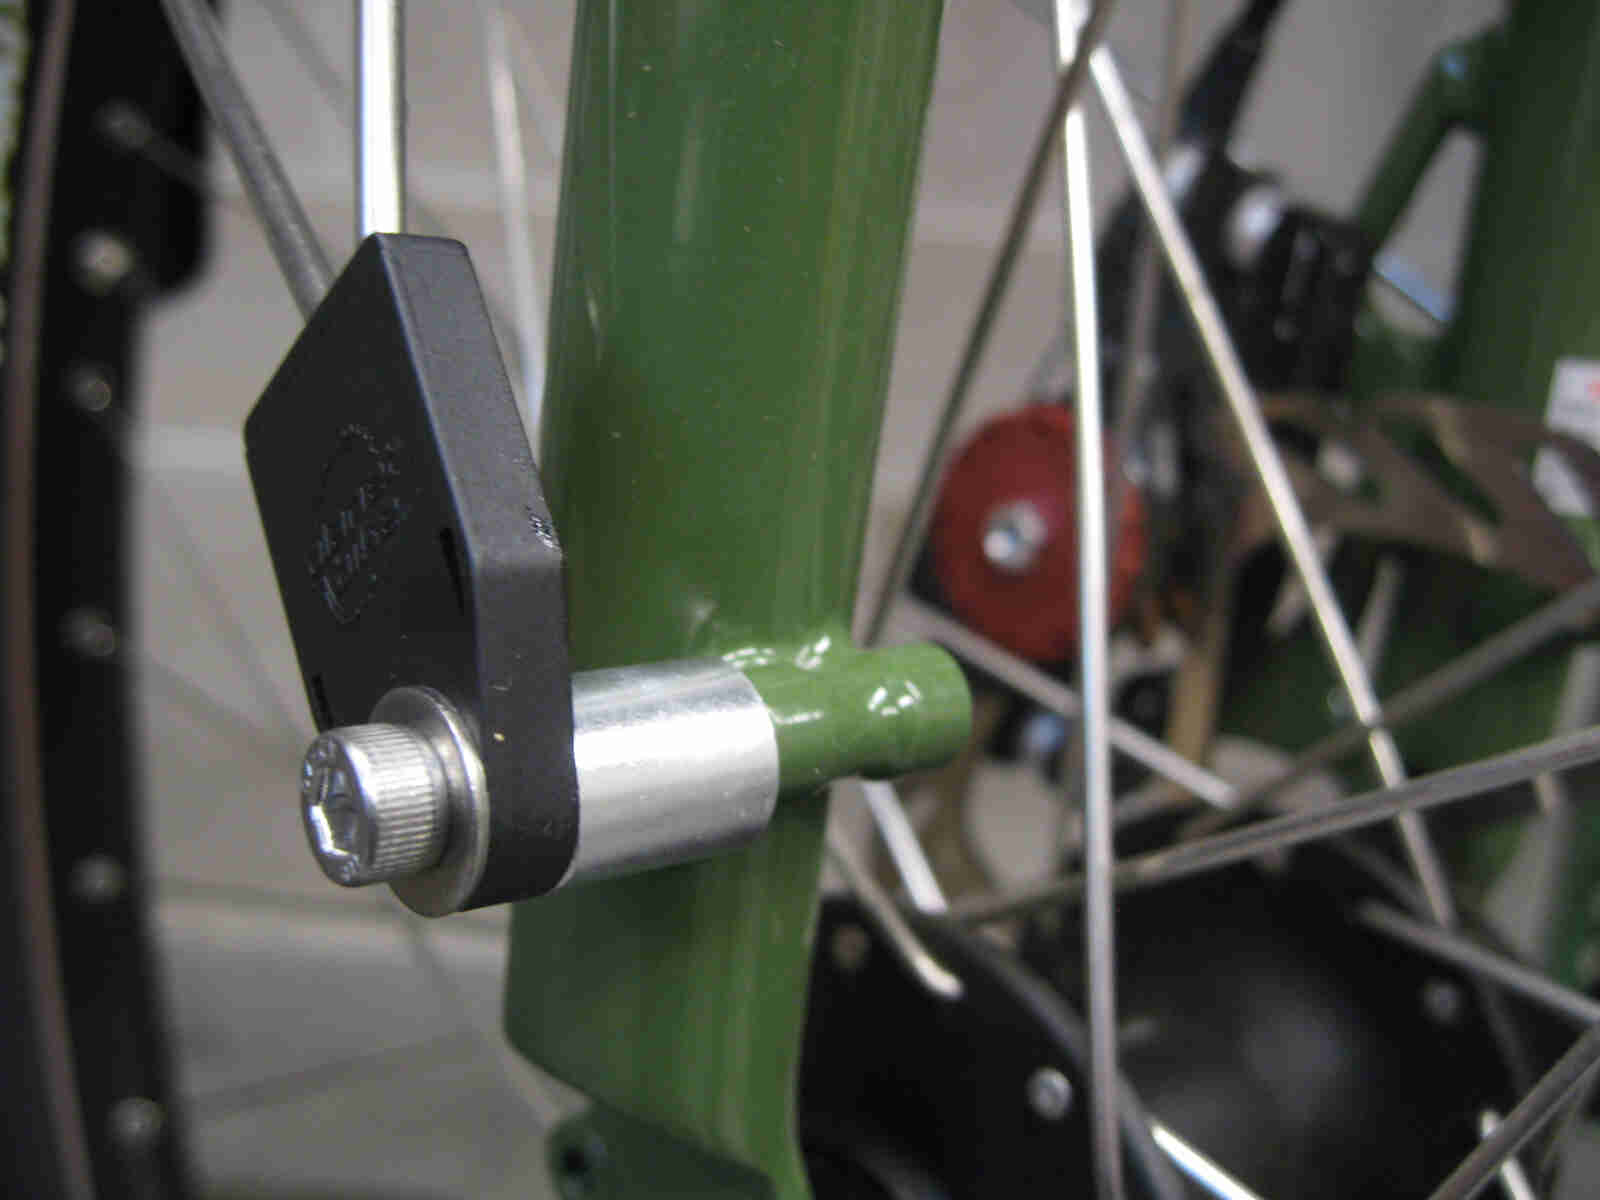 Surly Ogre bike - green - fork, front fender spacer nut detail - front, right side, close up view